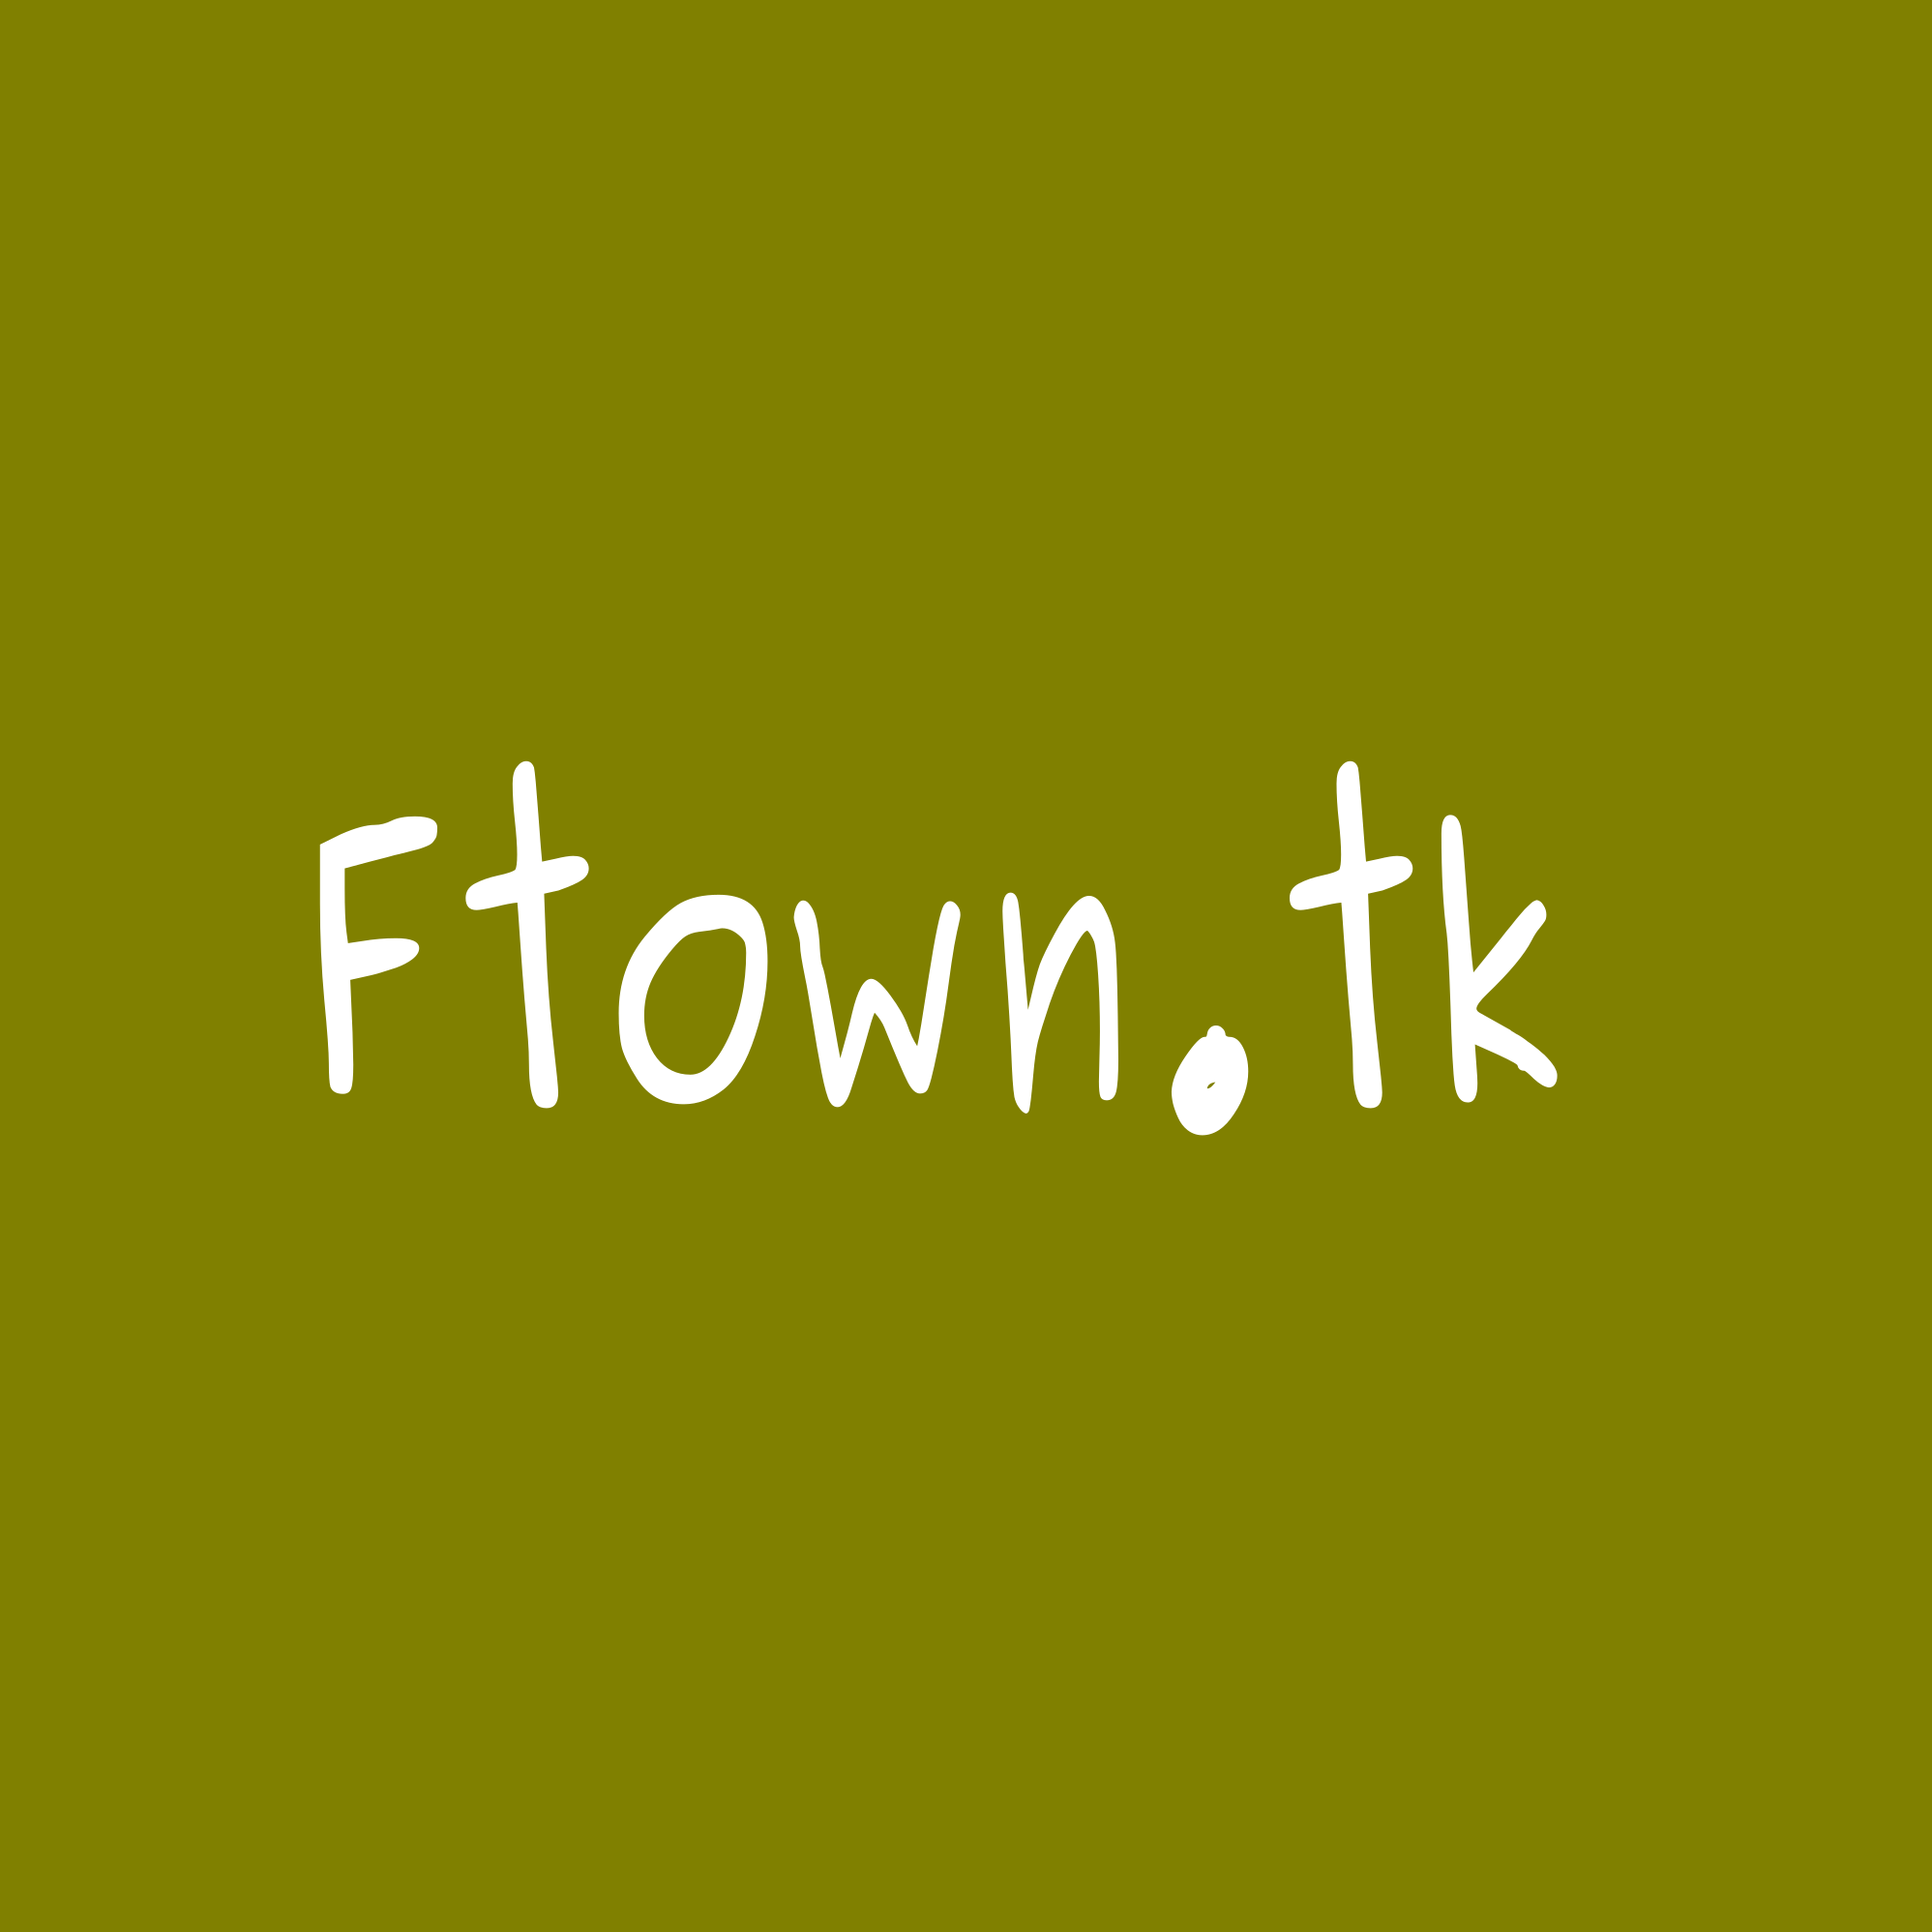 Ftown.tk